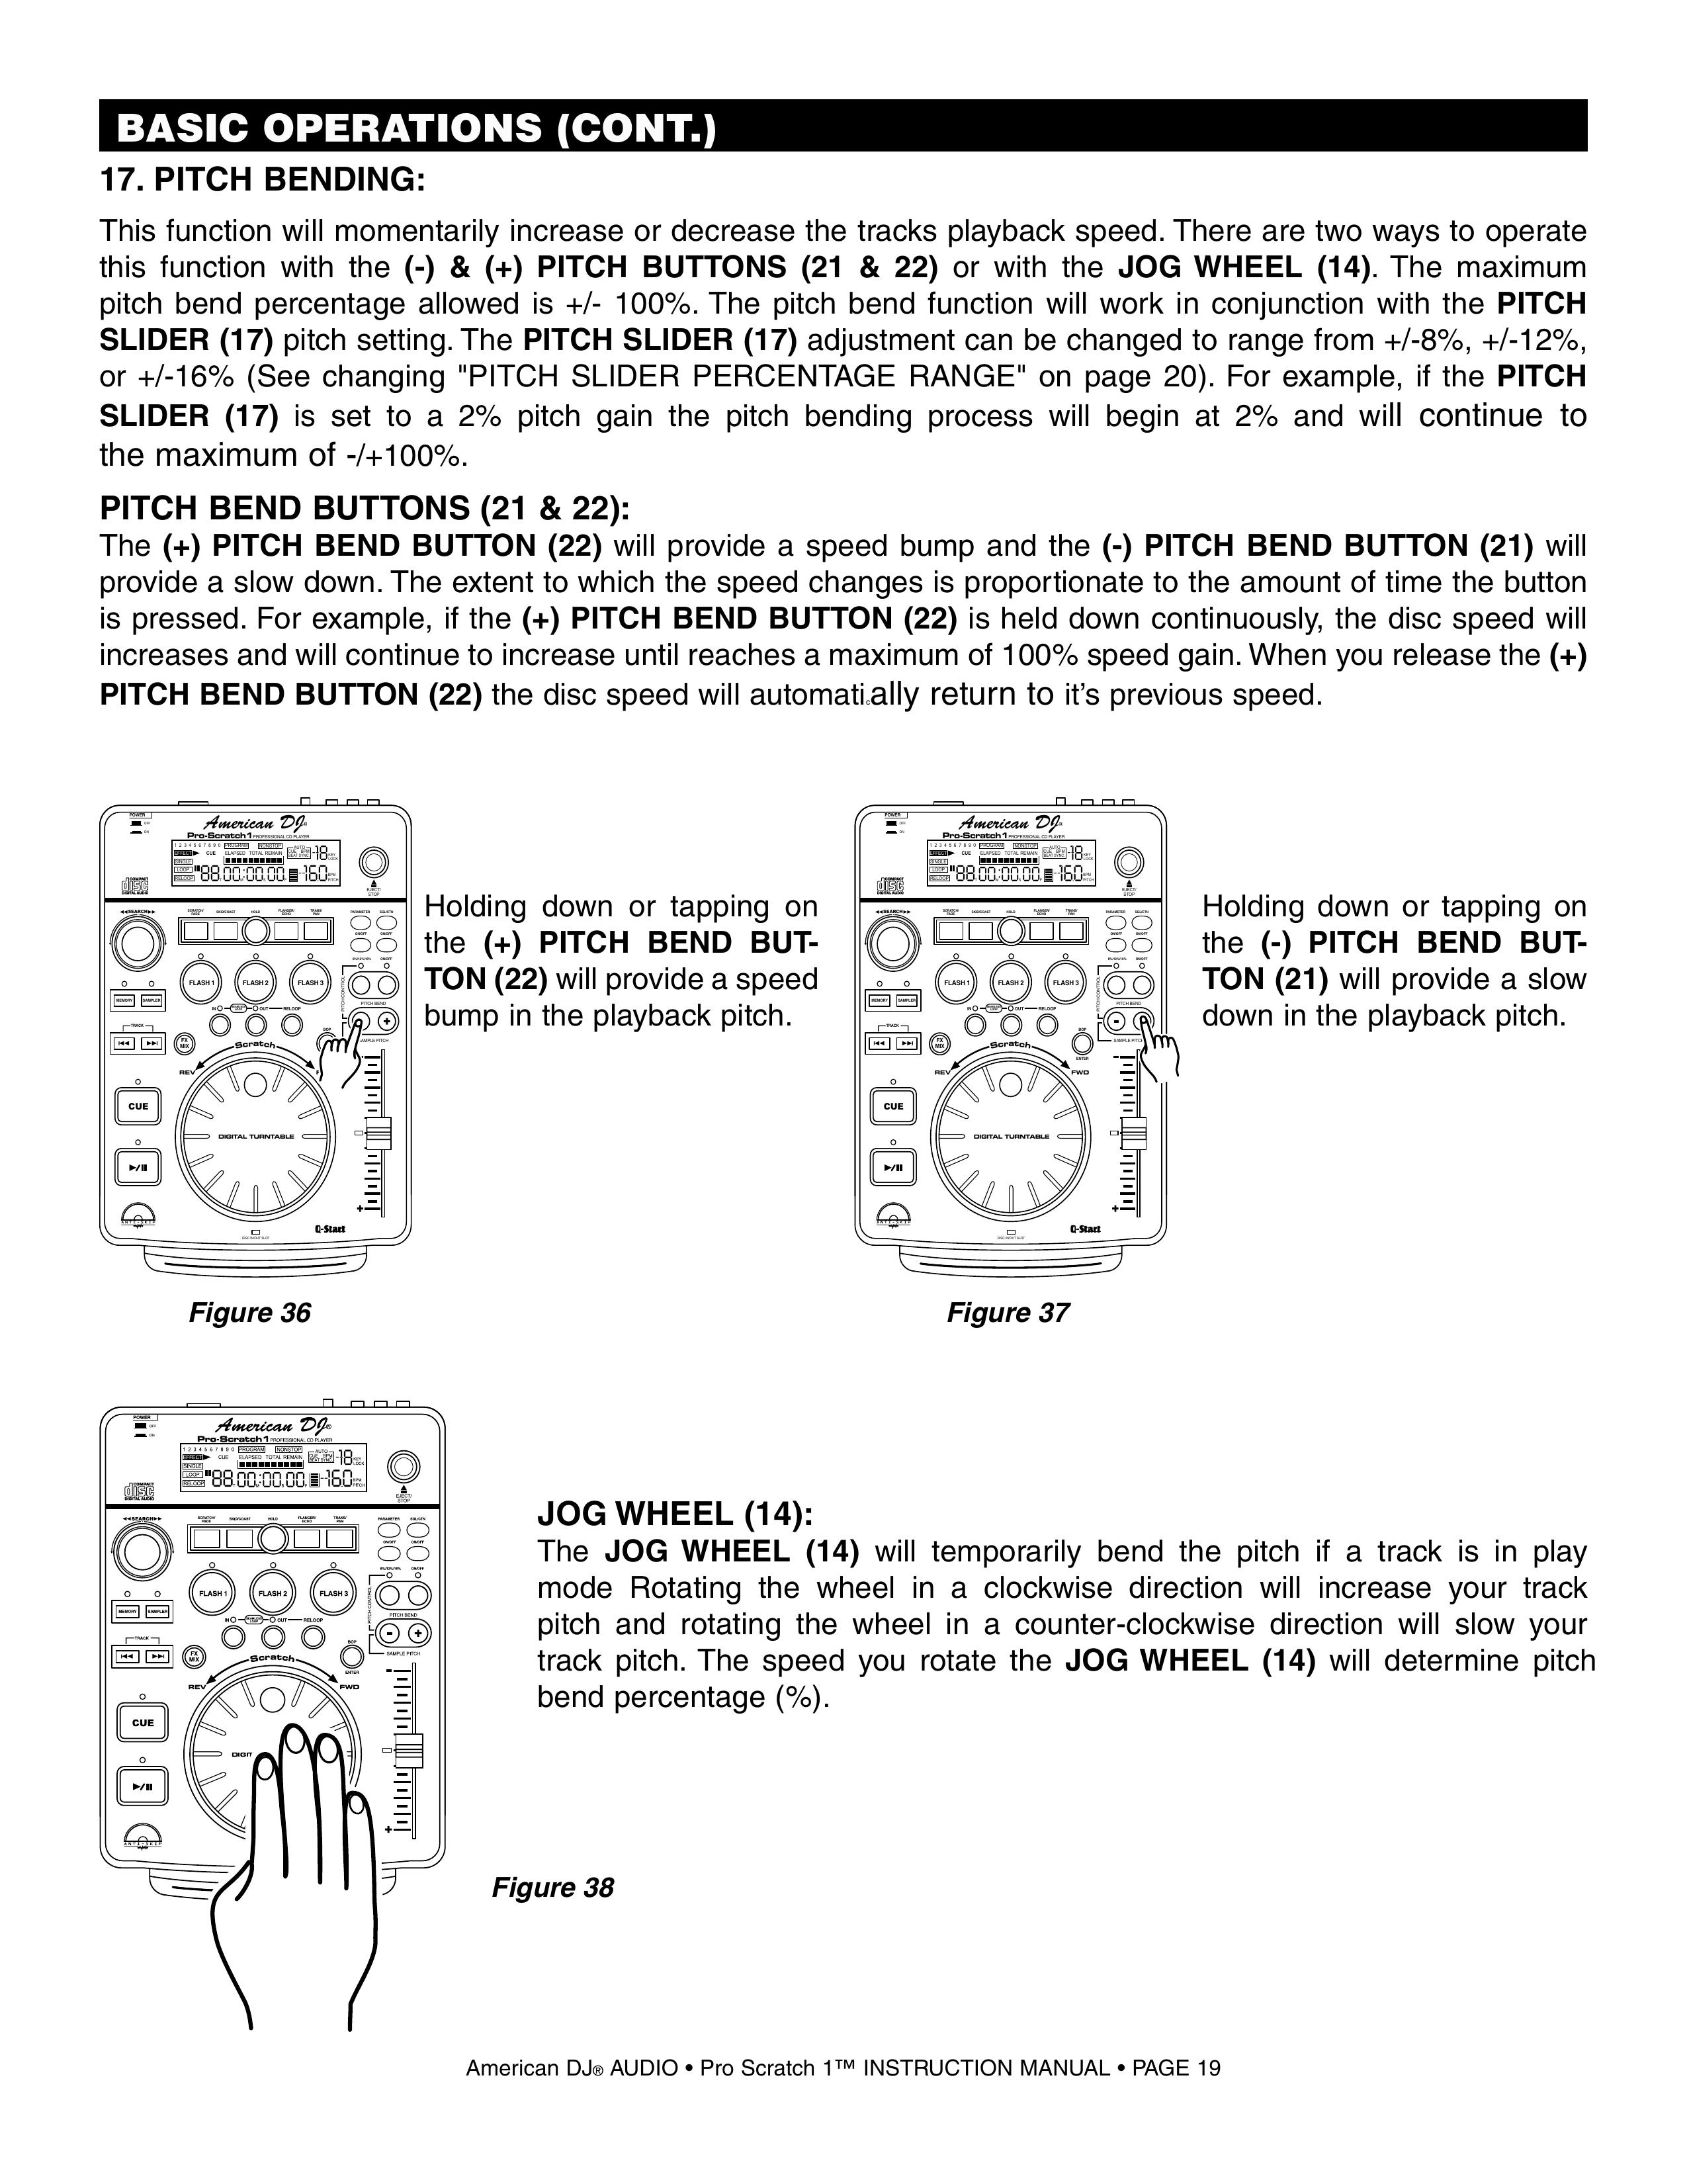 American Audio Pro Scratch 1 DJ Equipment User Manual (Page 19)